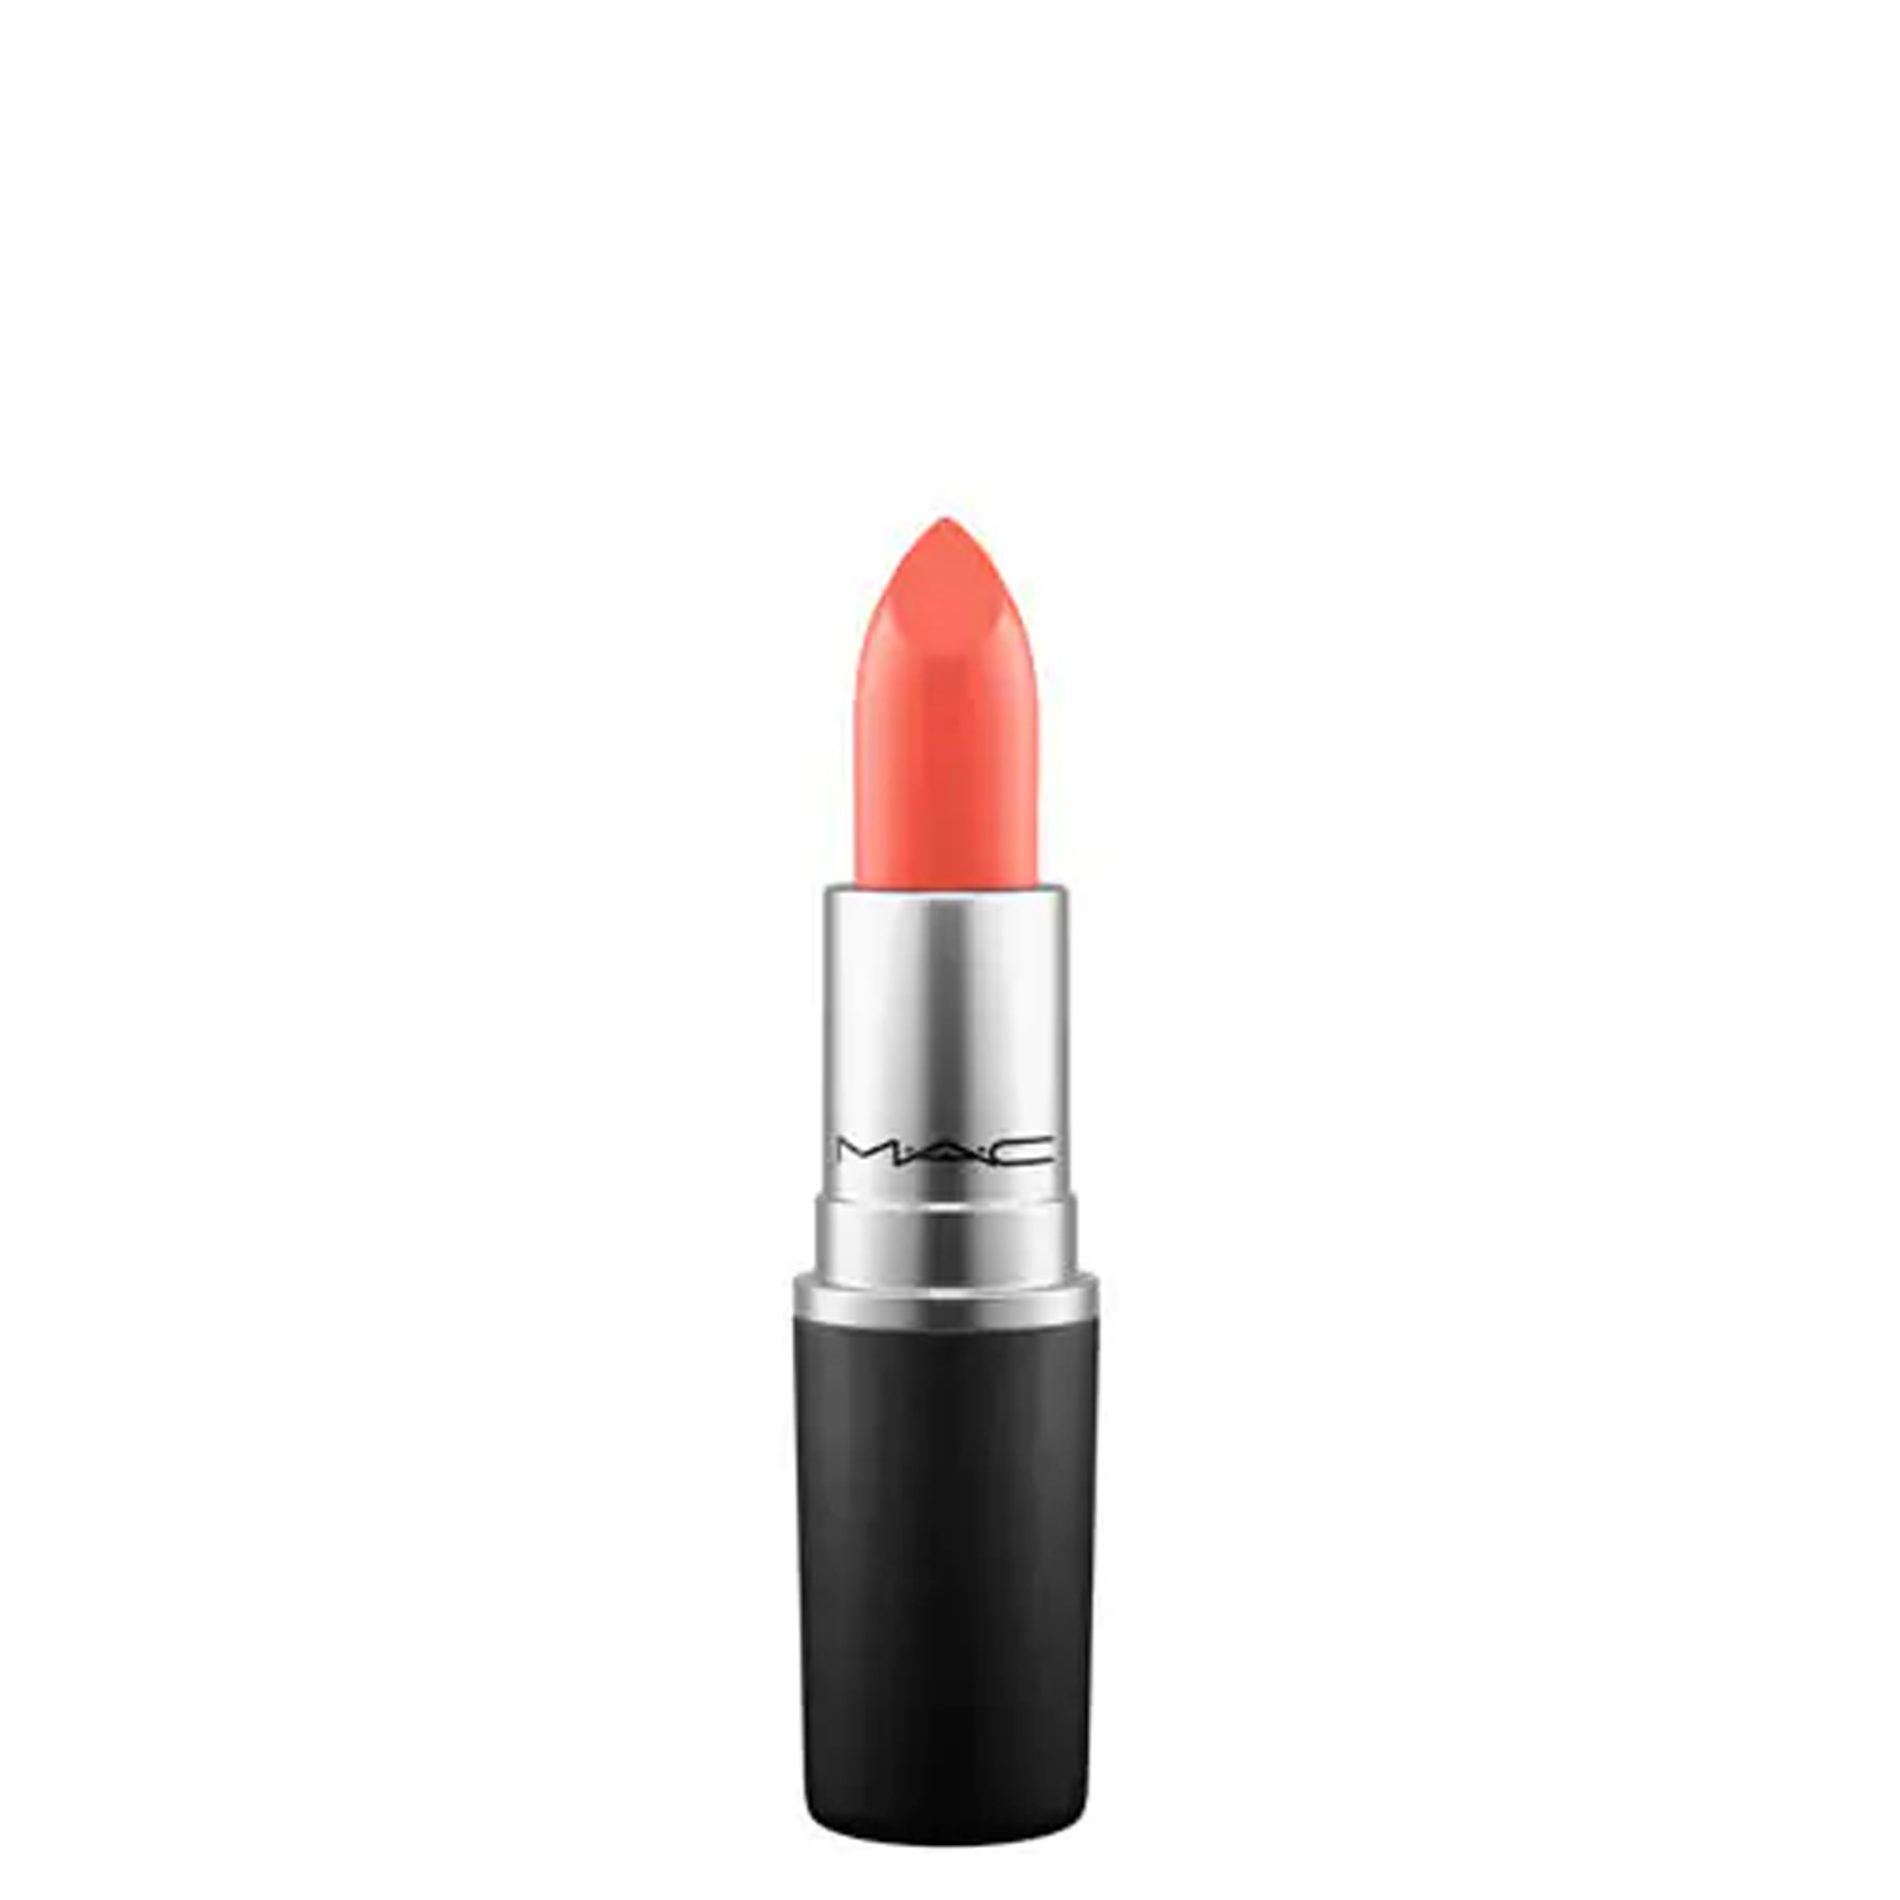 son-thoi-mac-lustre-lipstick-3g-9